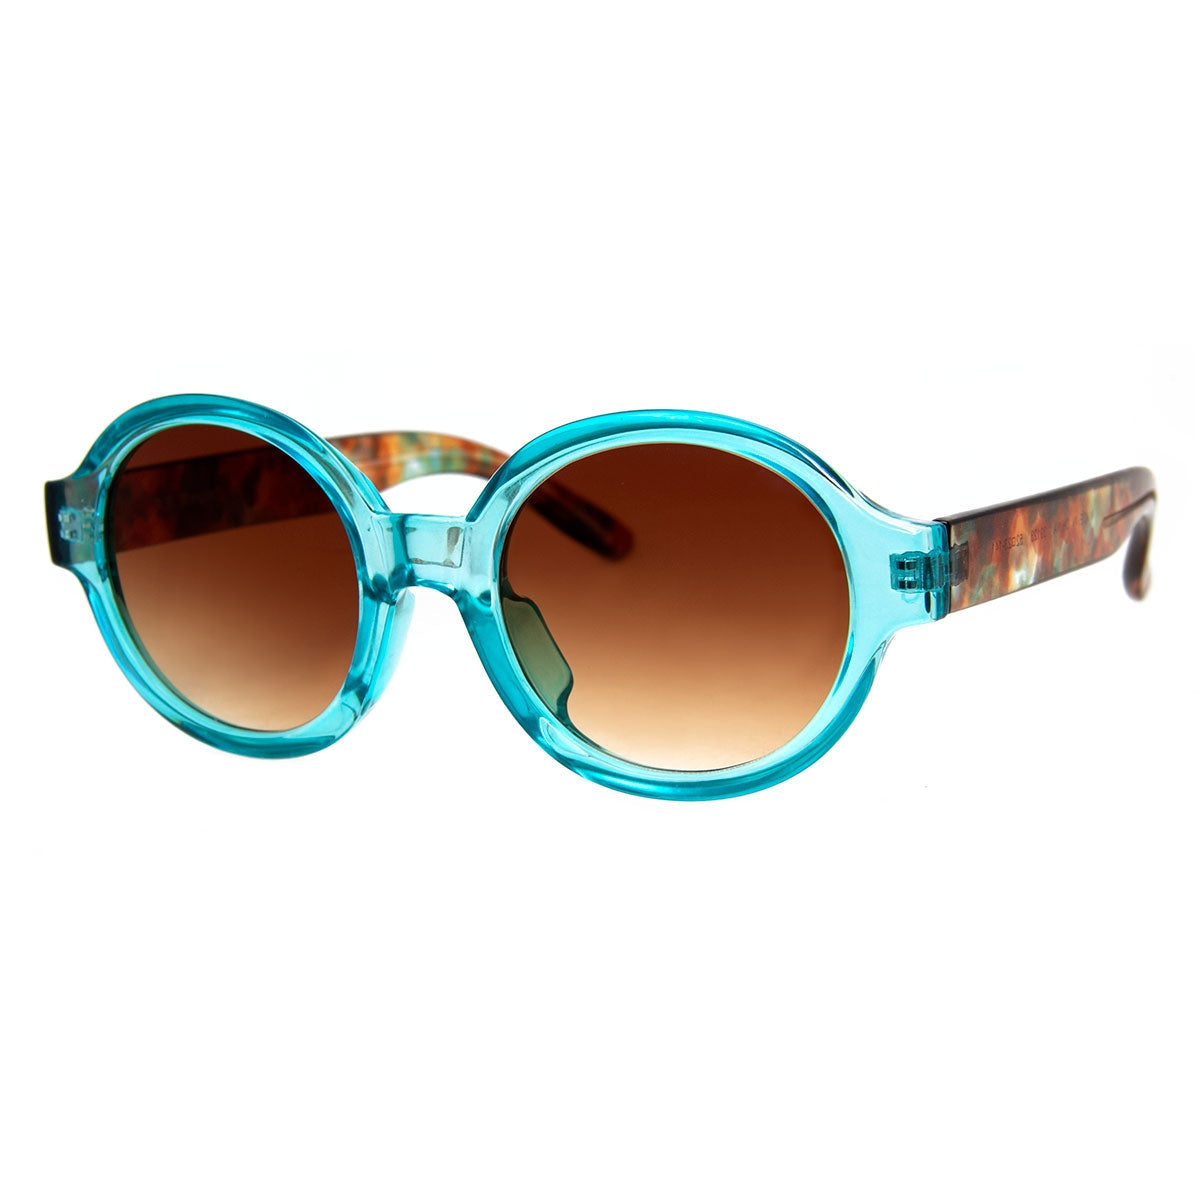 Boss City Sunglasses - Turquoise/Multi-Color